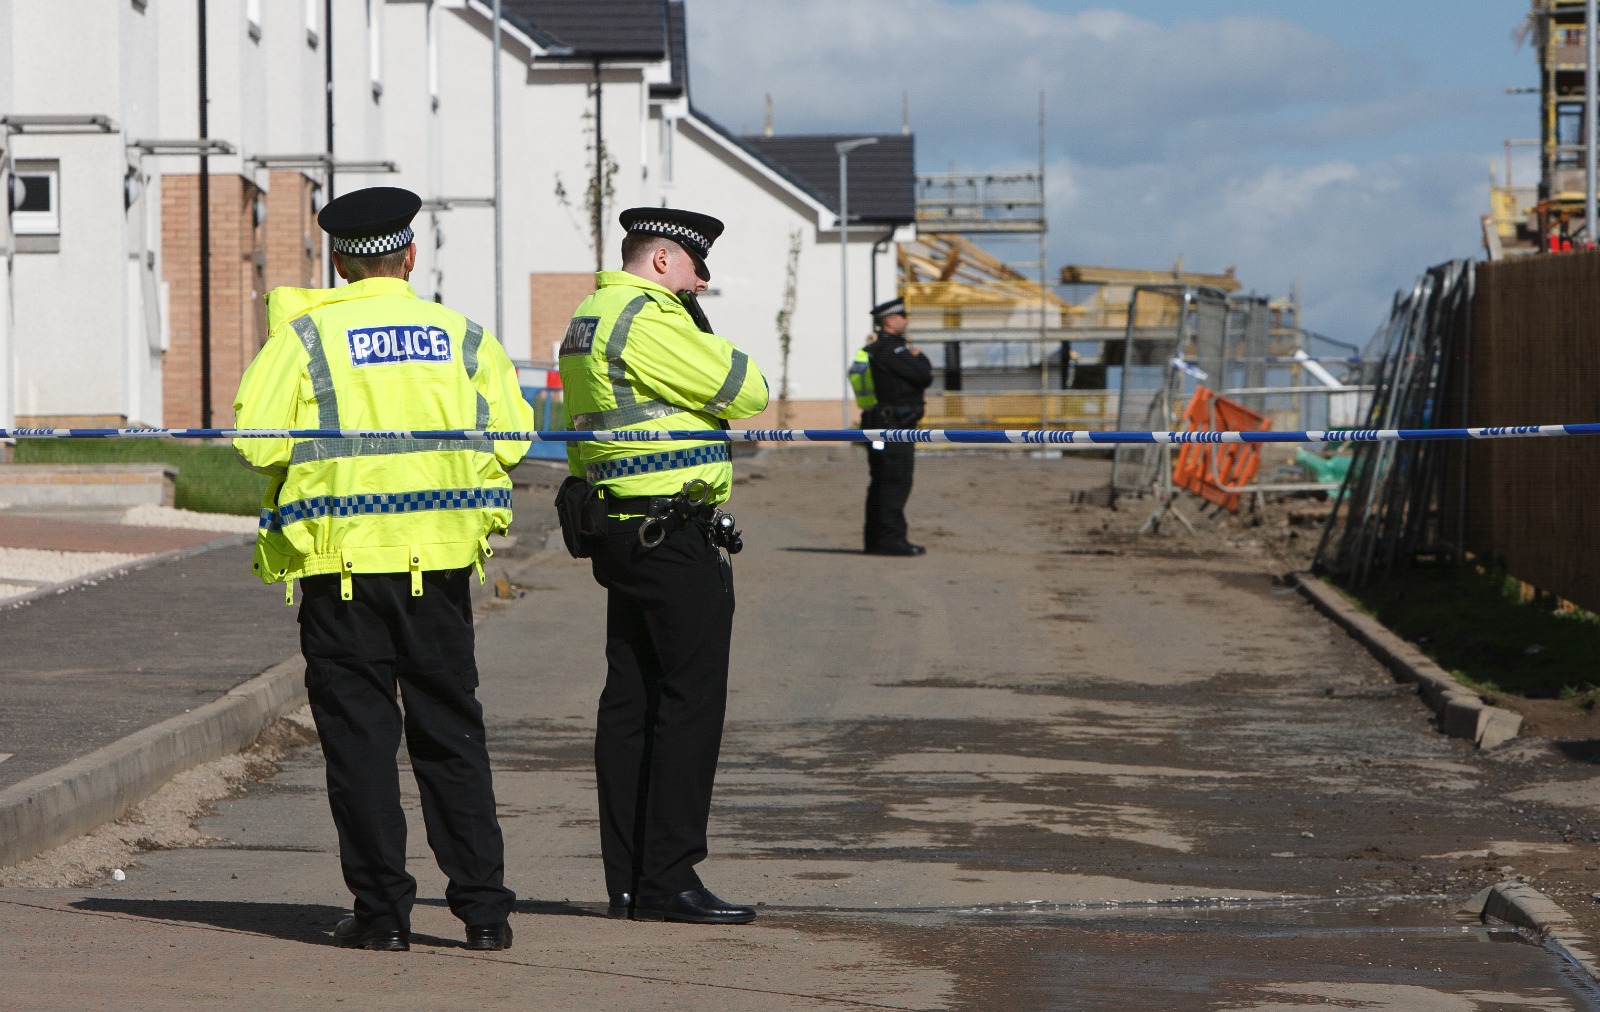 Man dies after being injured at building site in Glasgow